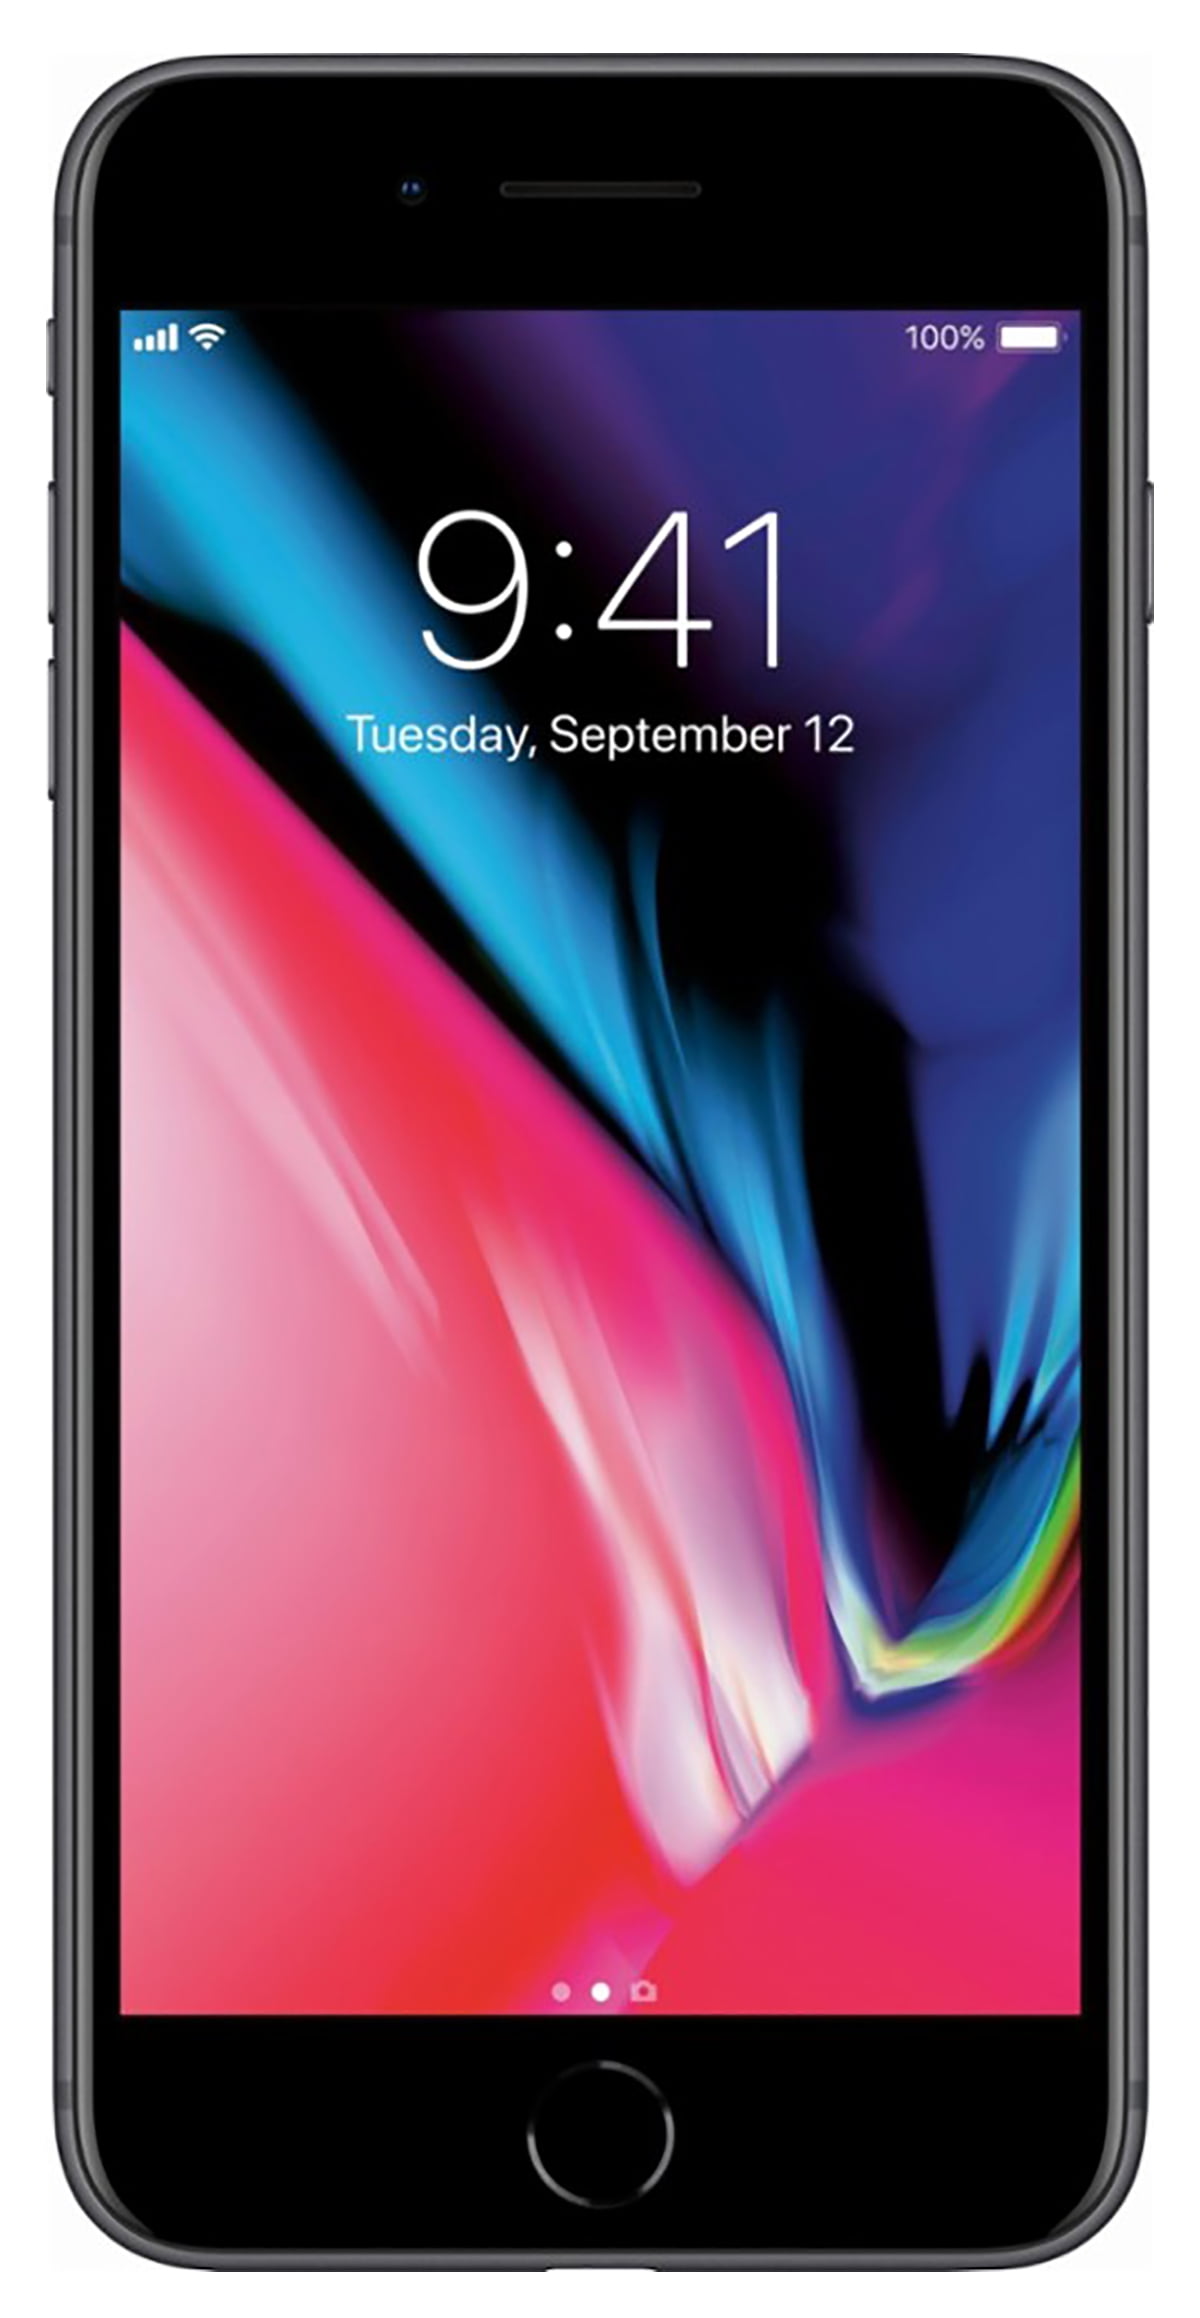 Apple iPhone 8 Plus 64GB, Space Gray - Unlocked GSM/CDMA - Walmart.com